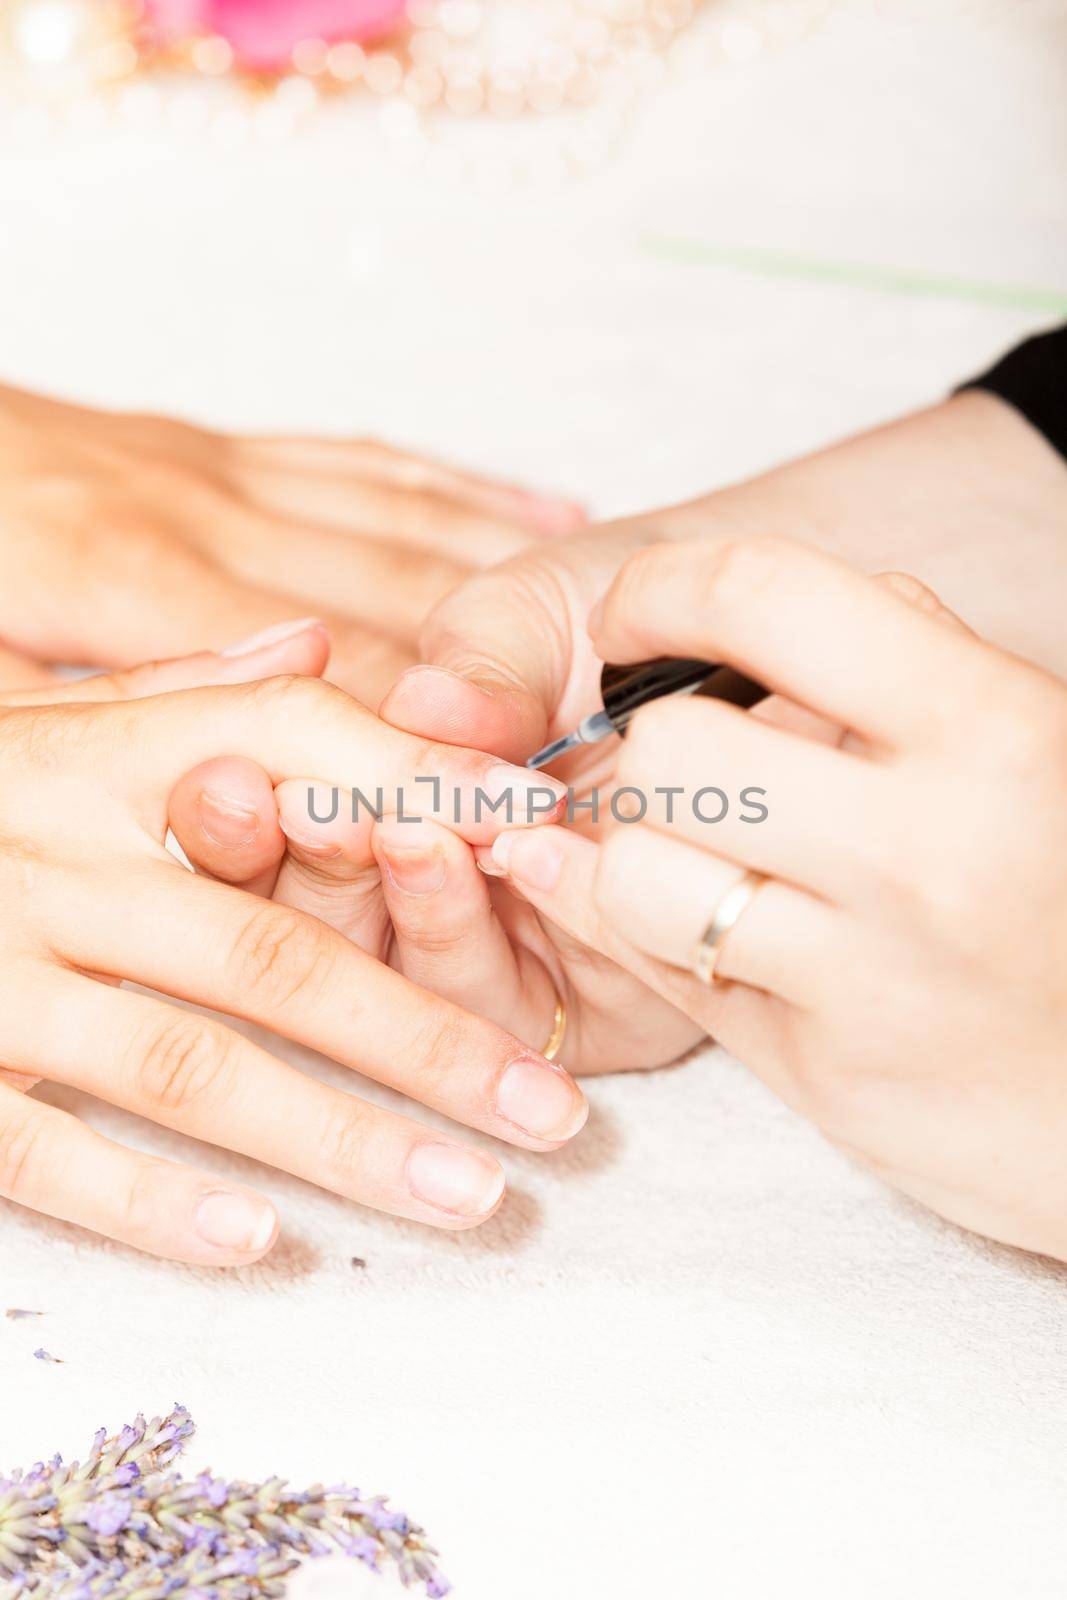 Laying nail polish on a woman's hands